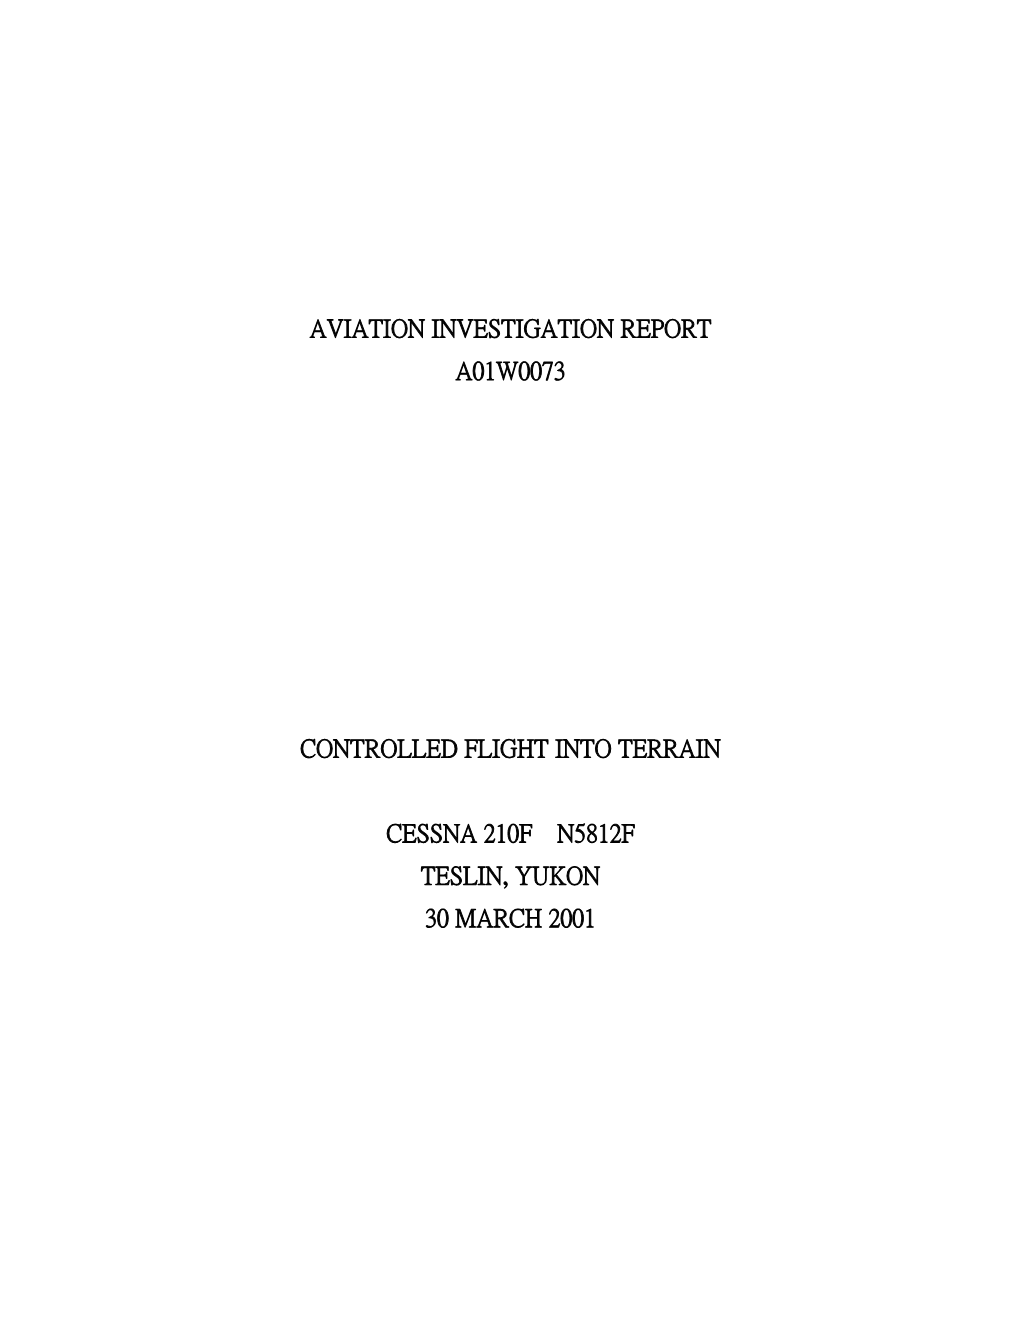 Aviation Investigation Report A01w0073 Controlled Flight Into Terrain Cessna 210F N5812f Teslin, Yukon 30 March 2001